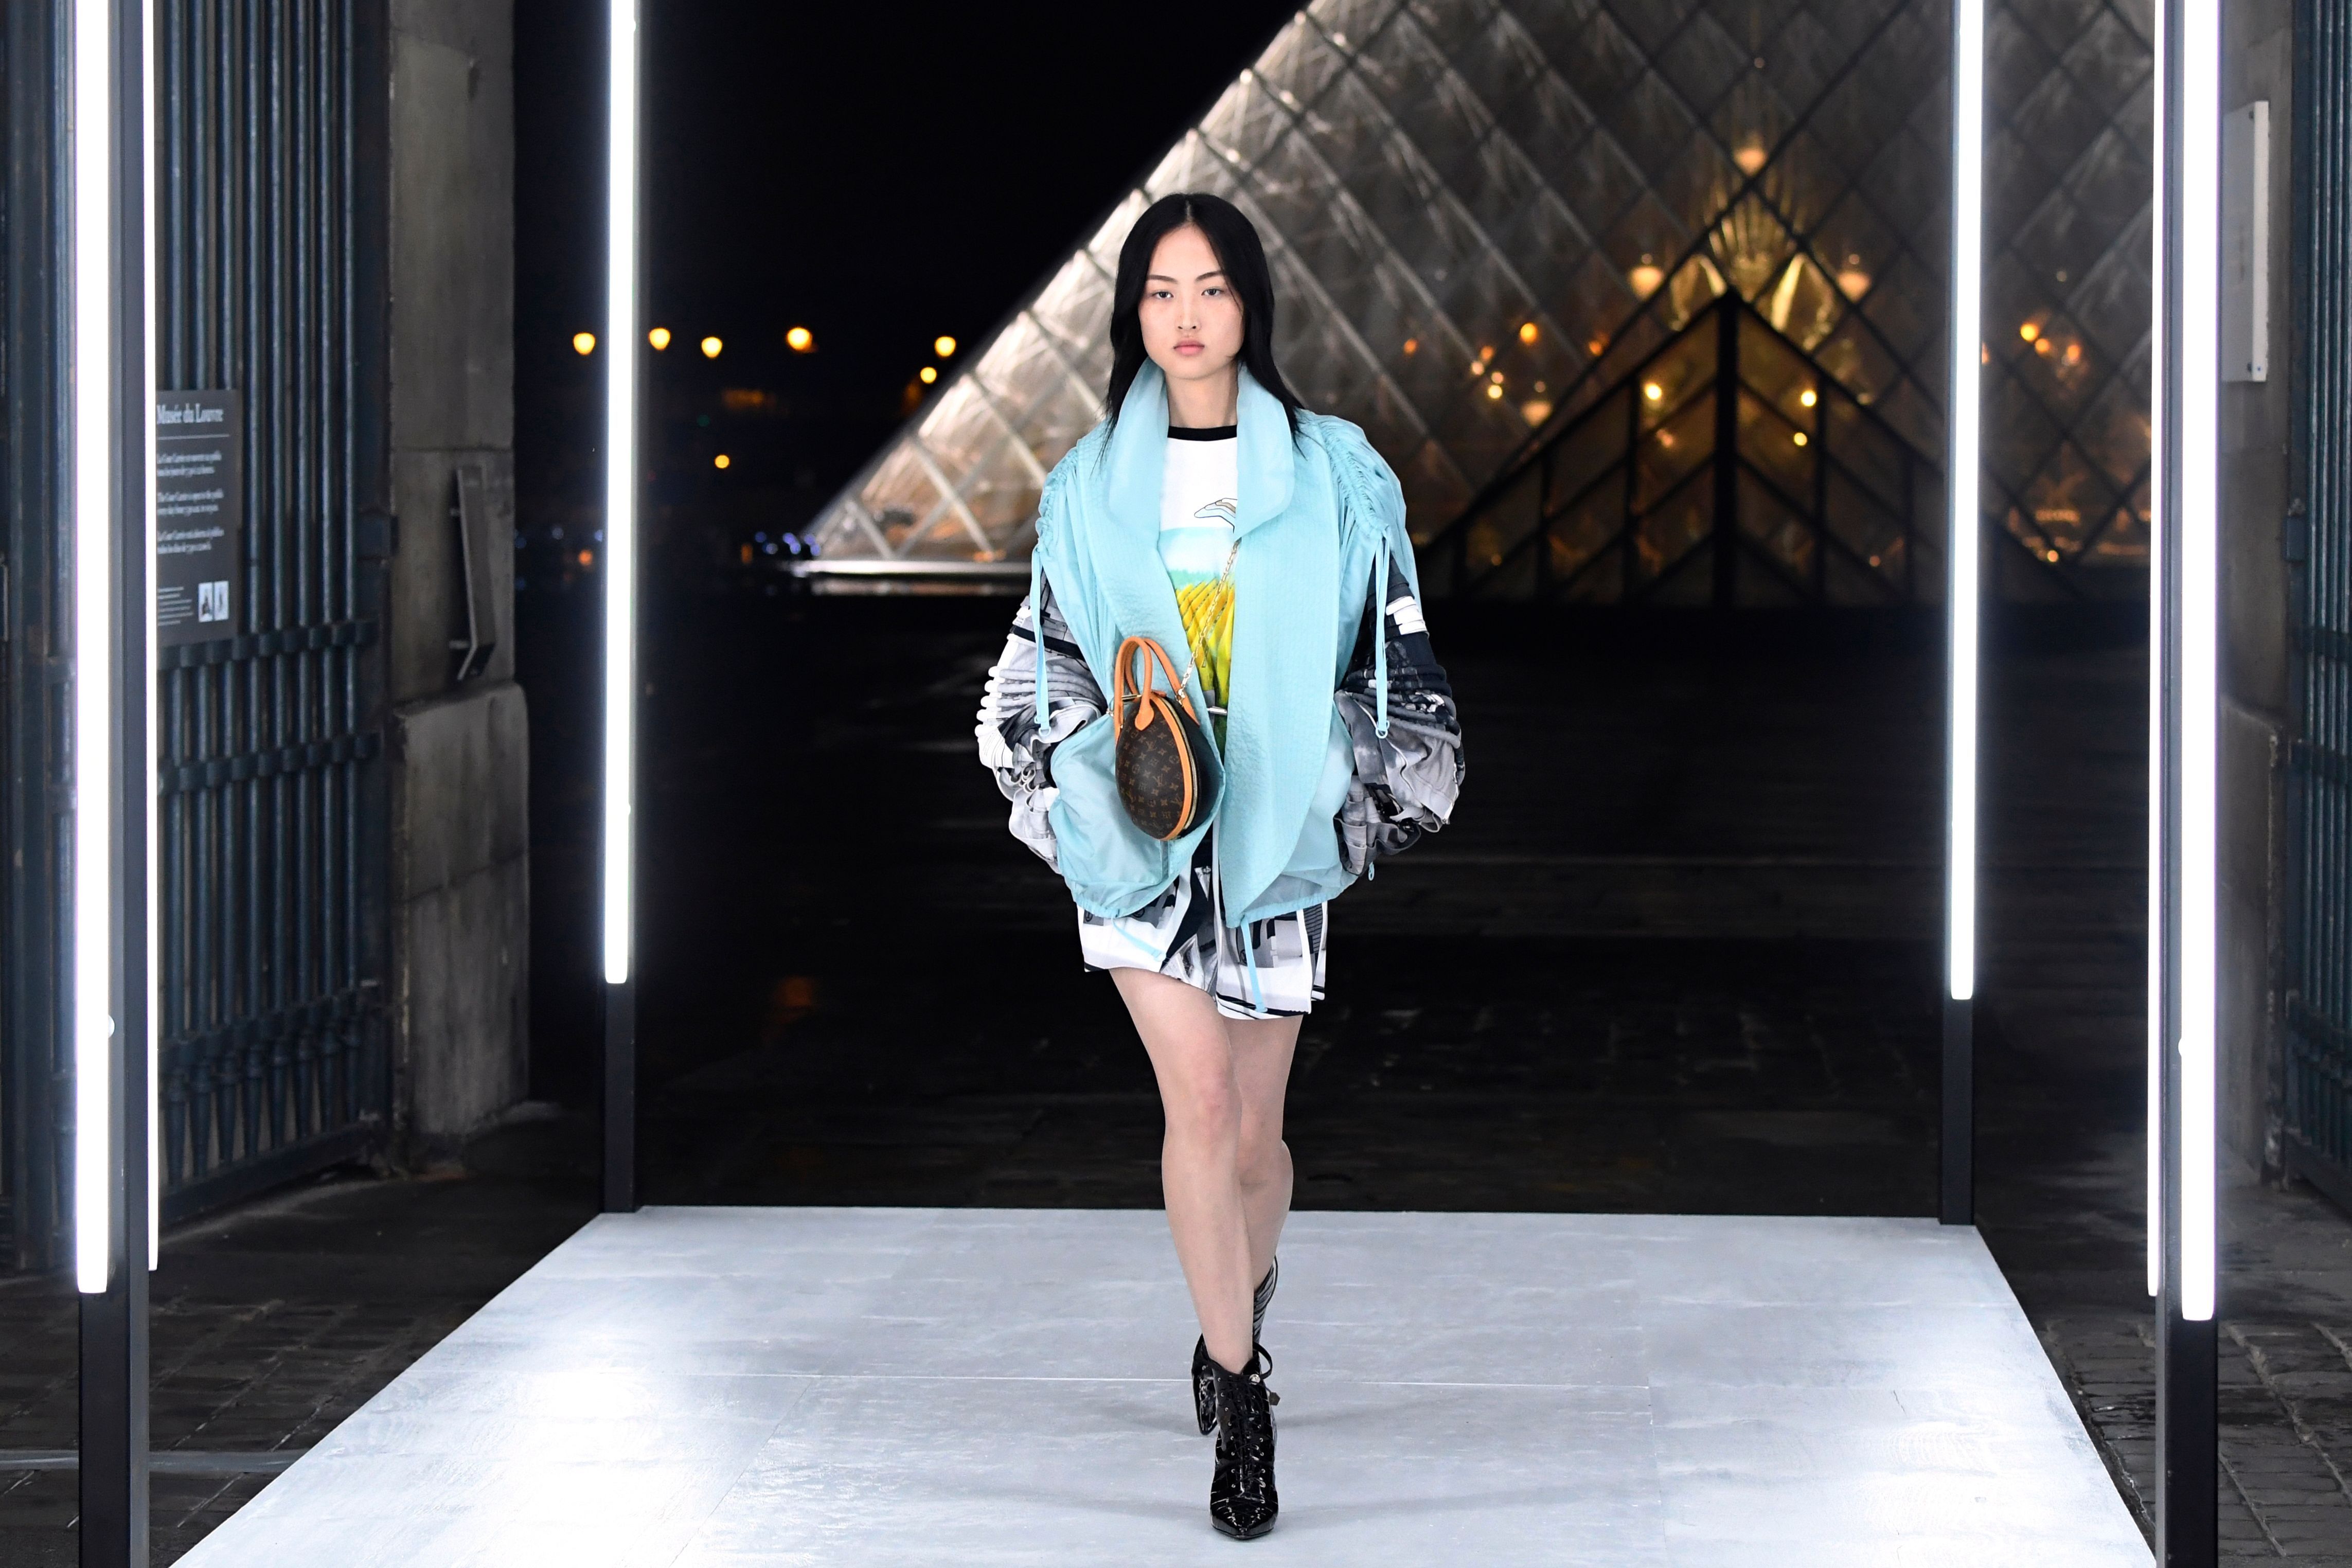 Nicolas Ghesquière Looks to the Future on Louis Vuitton's Spring